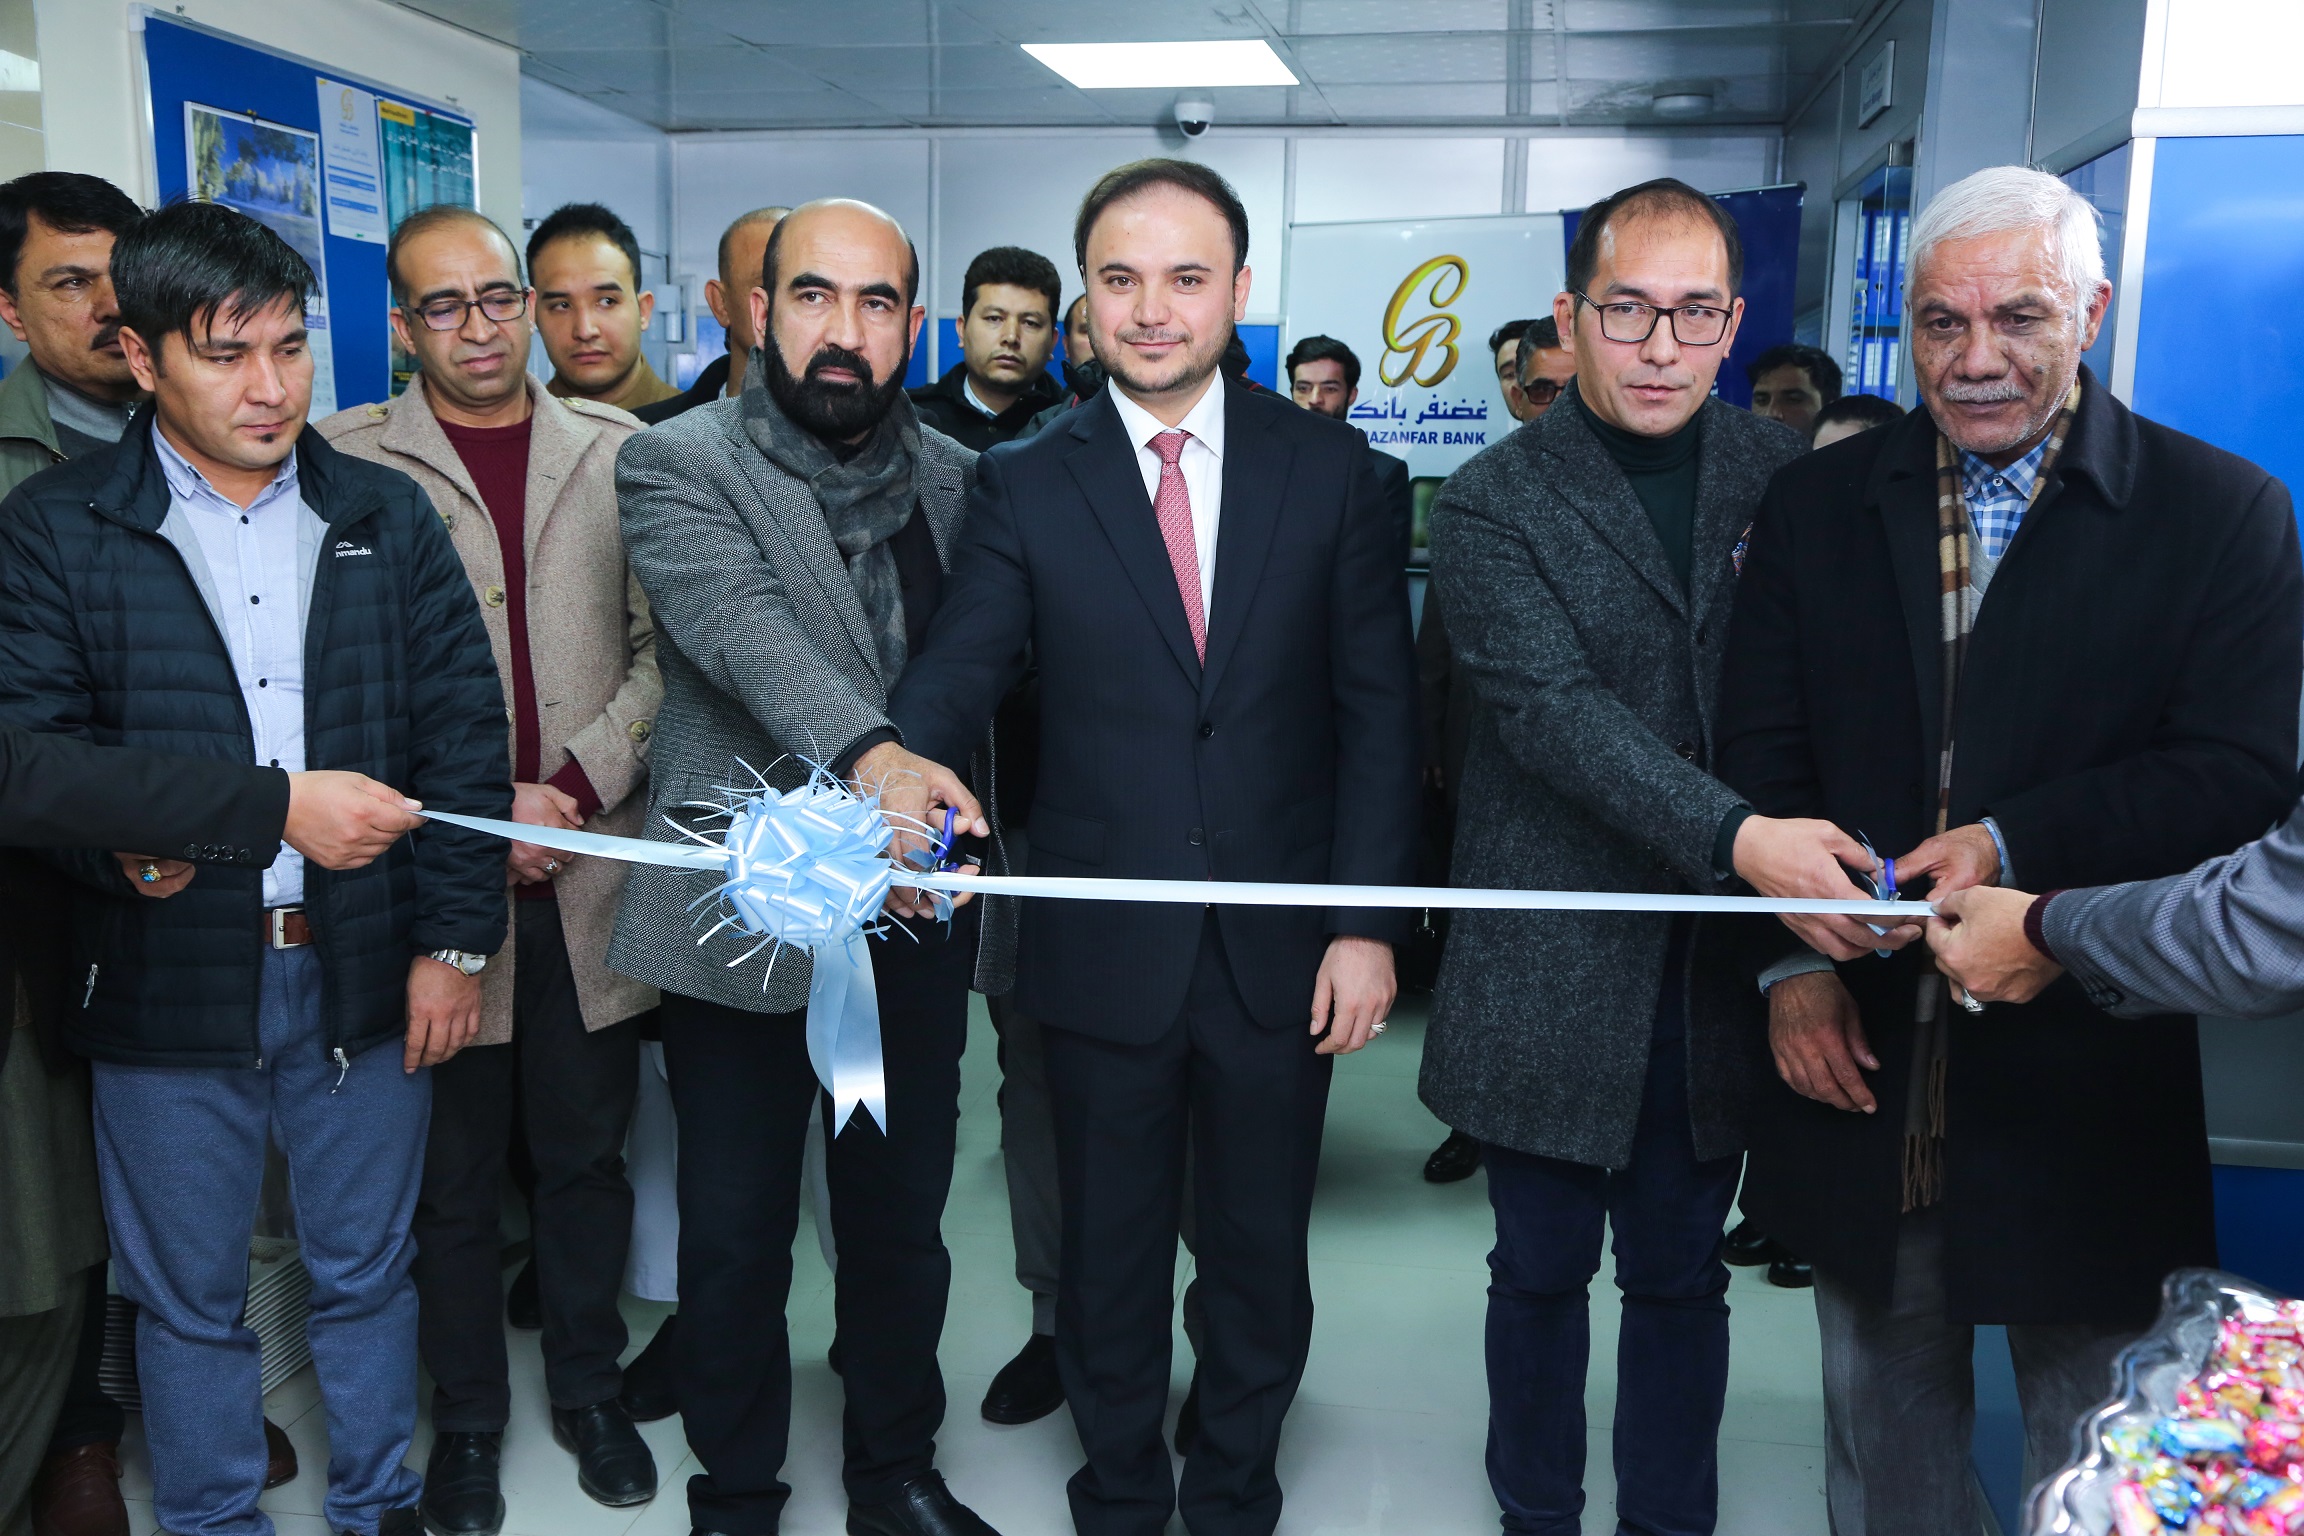 Ghazanfar Bank New Branch Has Been Opened In Karte Char Of Kabul City